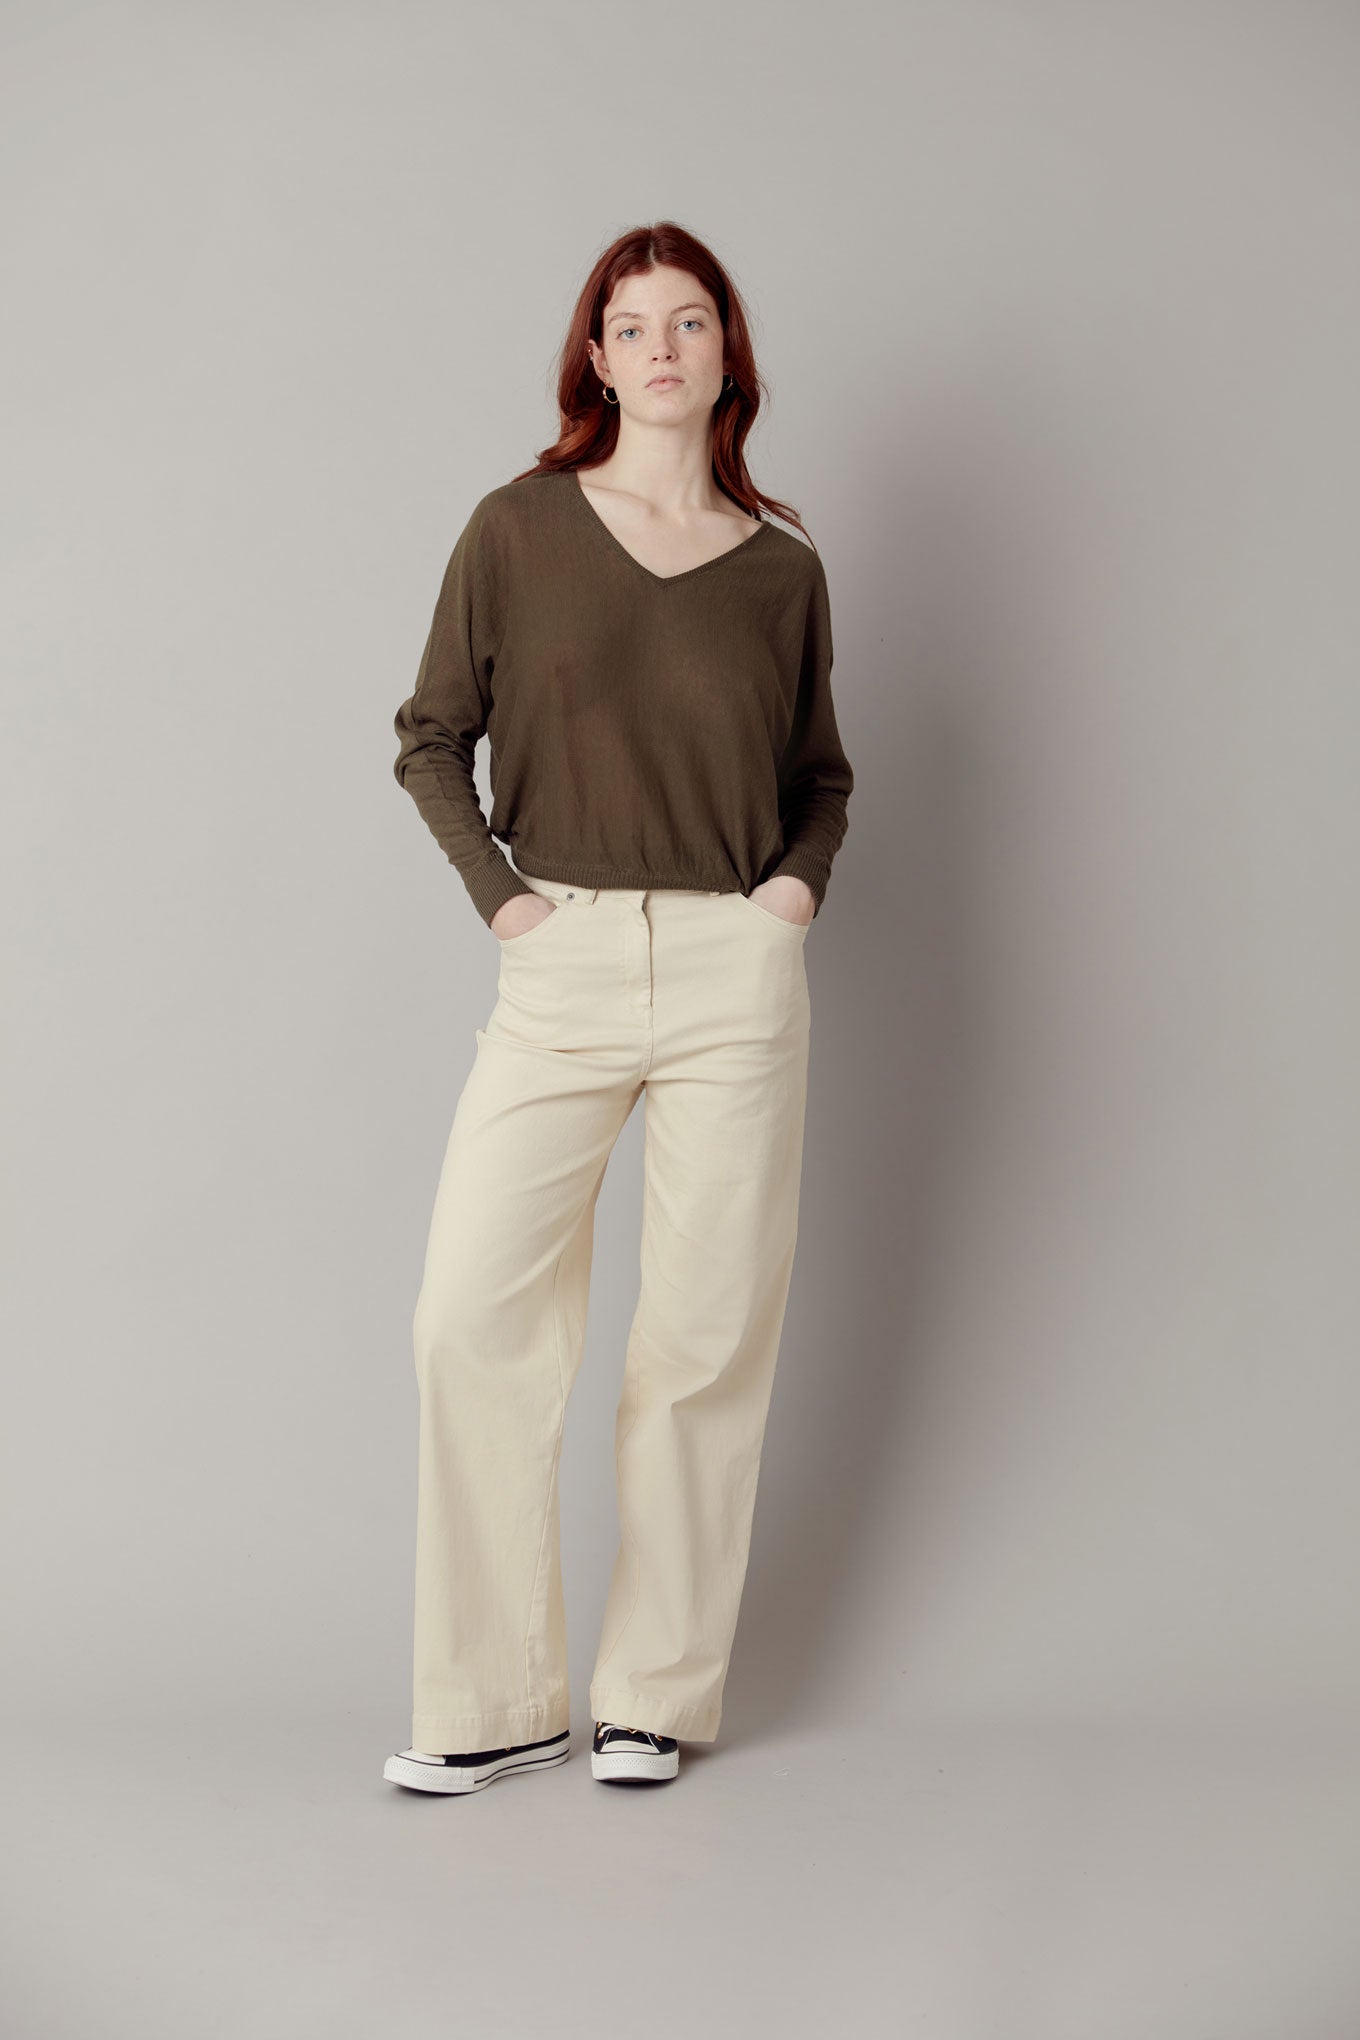 LYNX Organic Cotton Trousers - Soft Putty, SIZE 5 / UK 16 / EUR 44